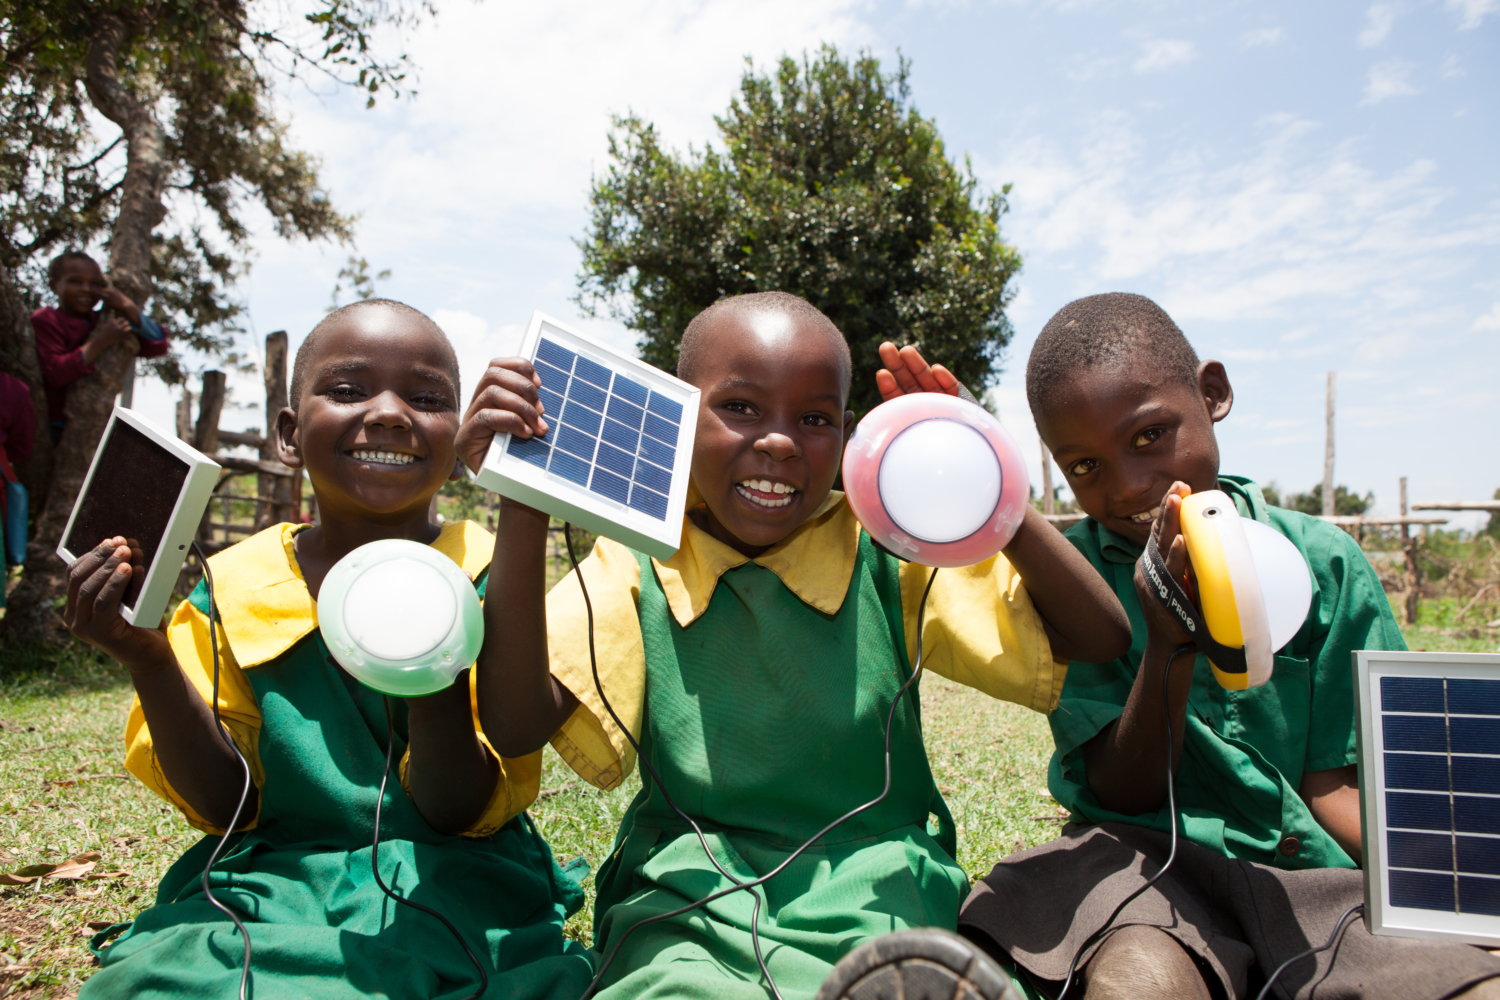 Solar Technology Alleviating Poverty